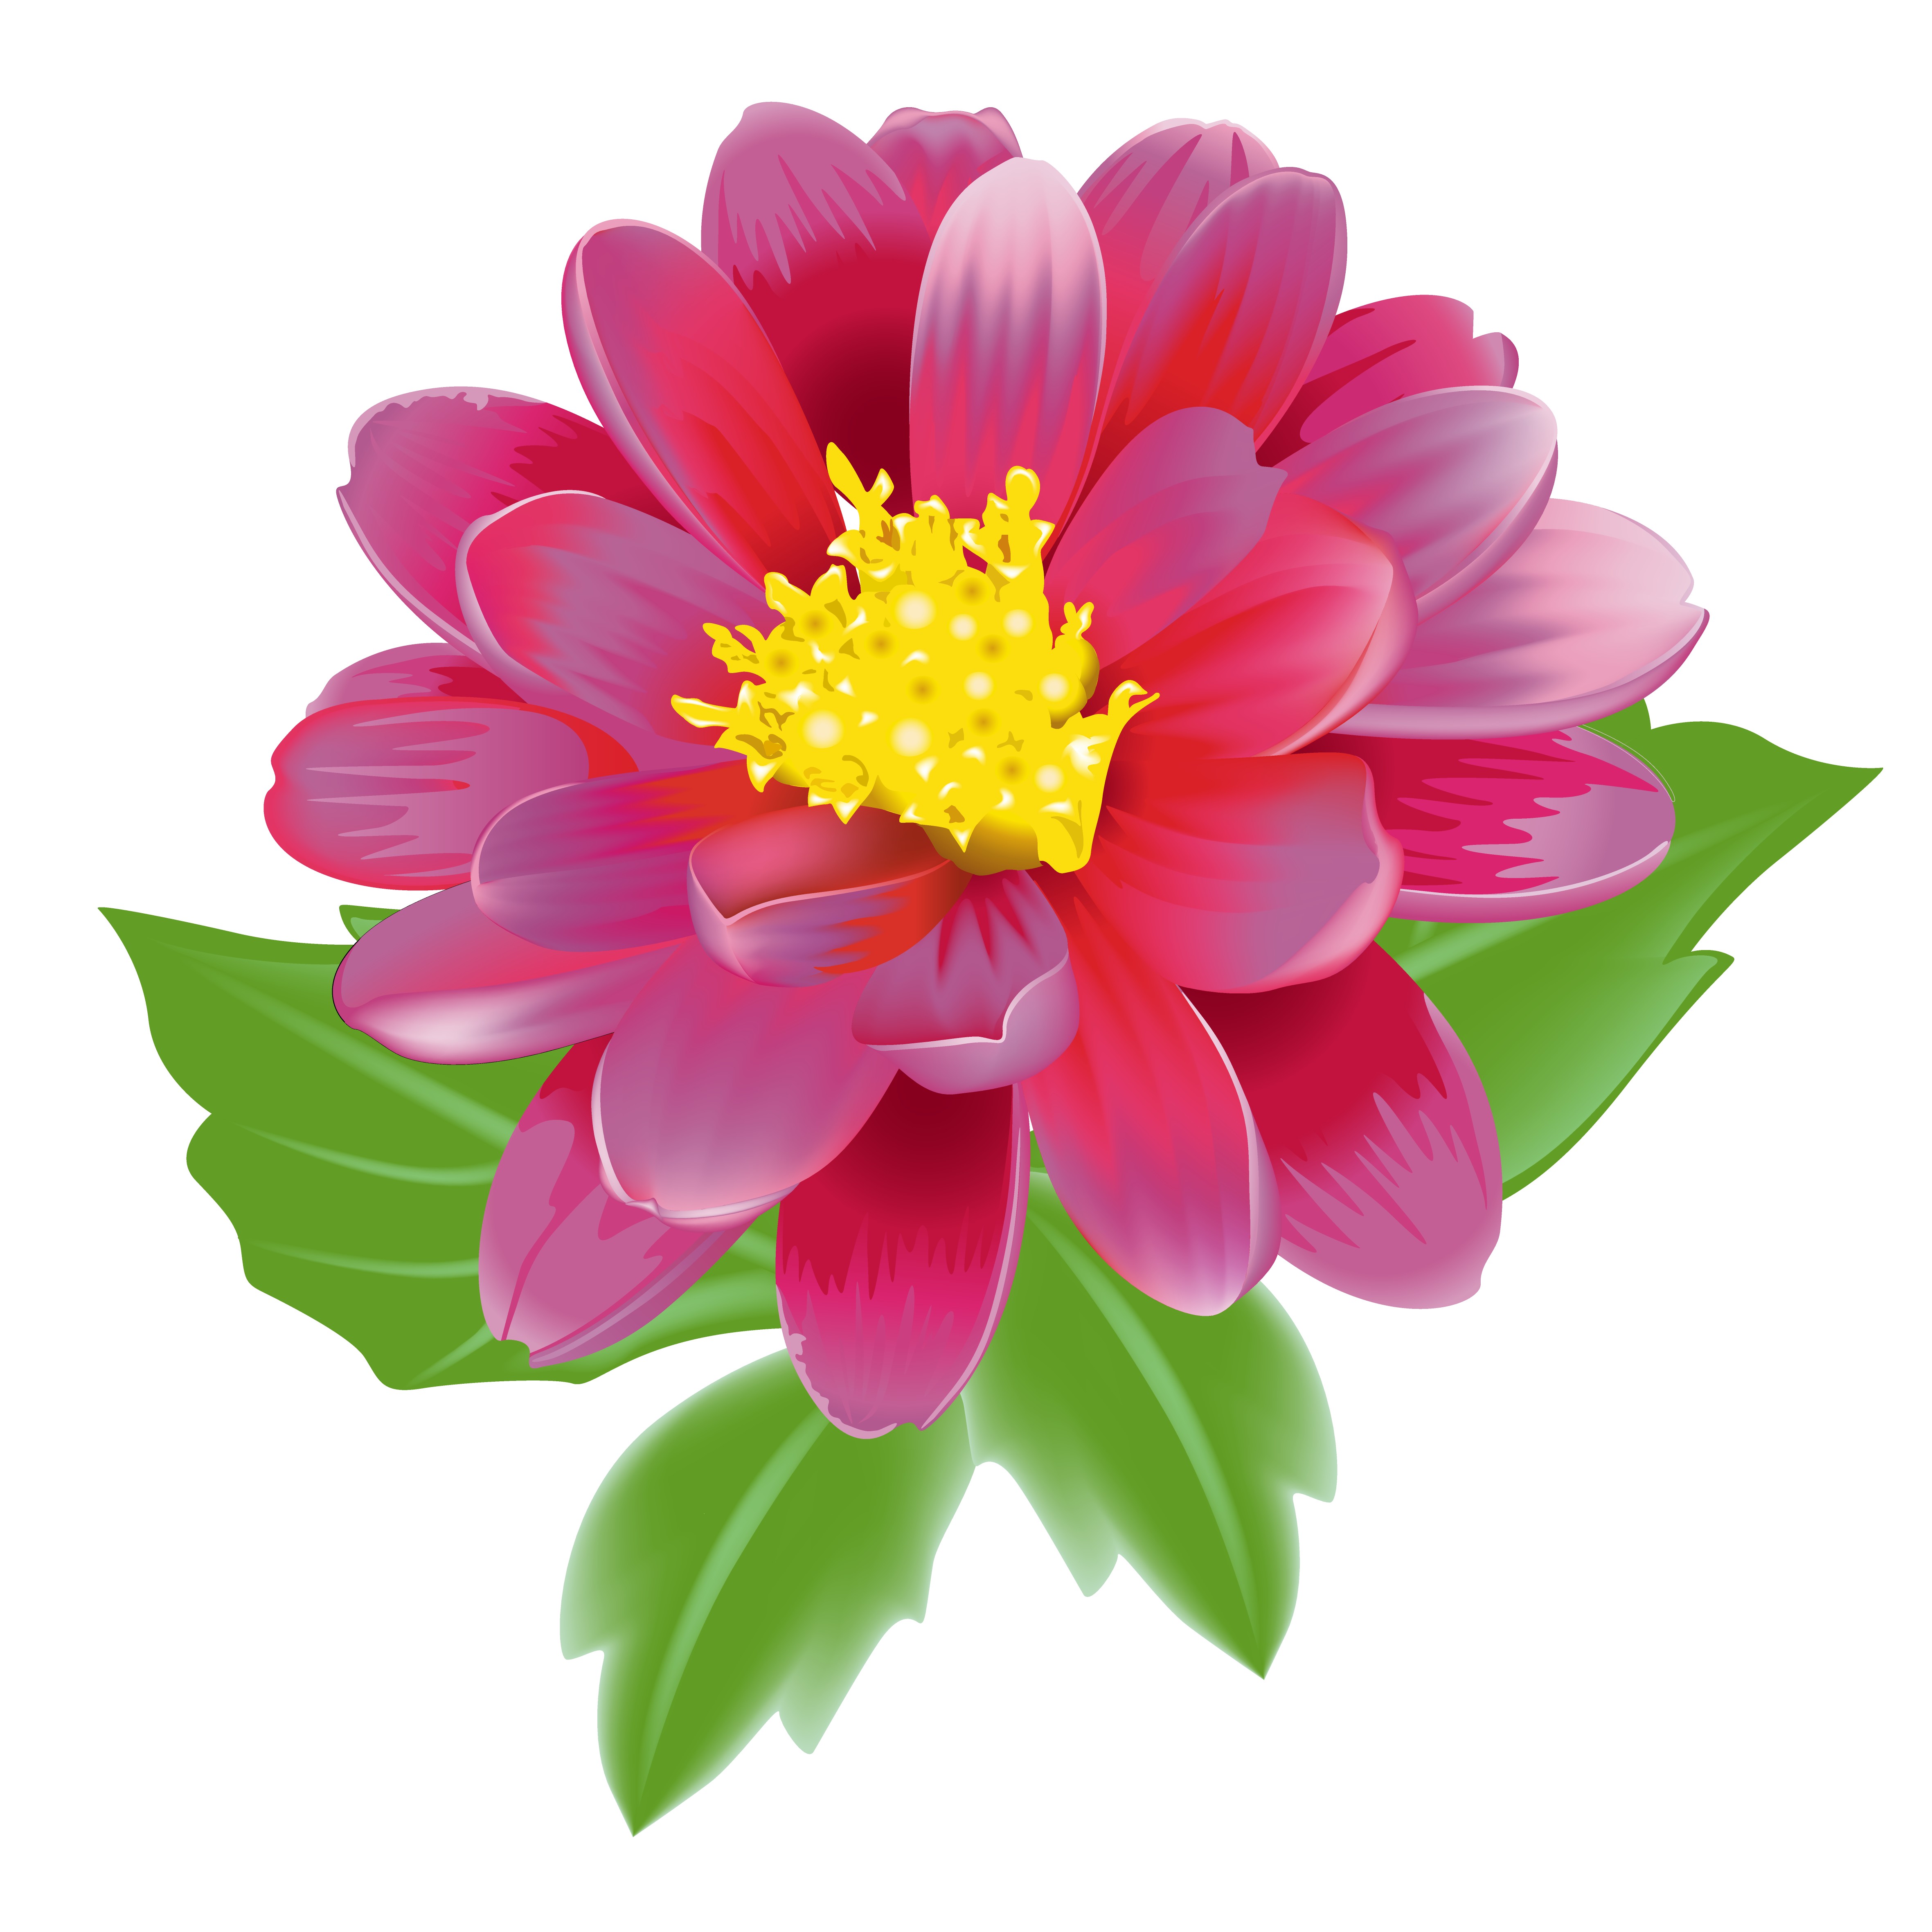 Download Beautiful Blooming Pink Exotic Flower - Download Free Vectors, Clipart Graphics & Vector Art